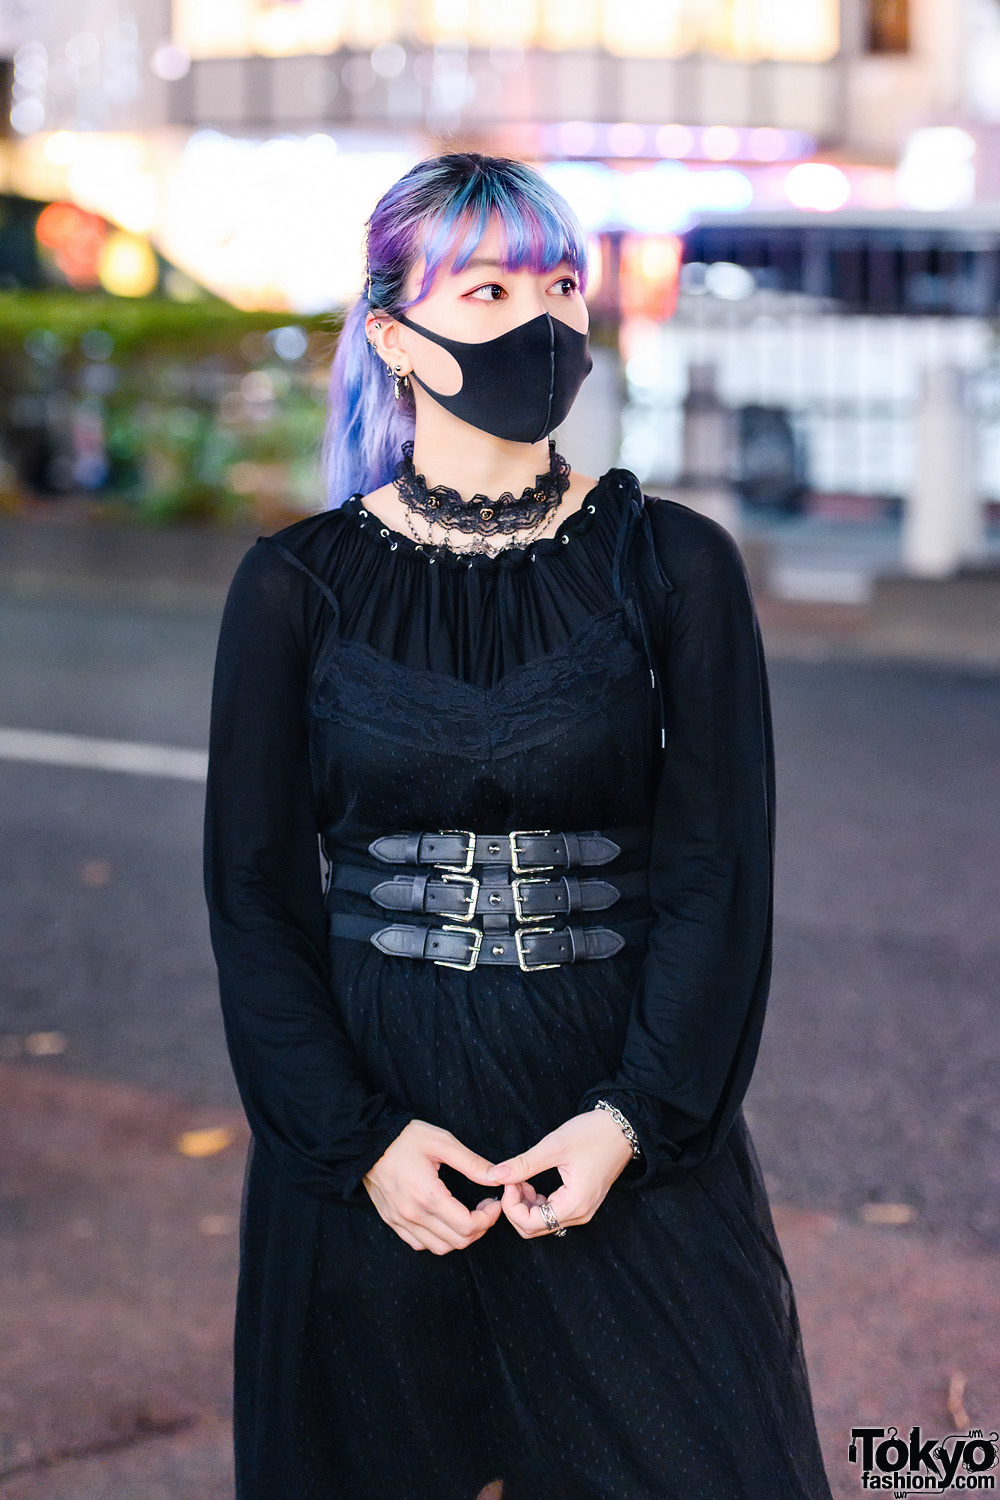 Colorful Corset Over Sheer Black Dress – Tokyo Fashion